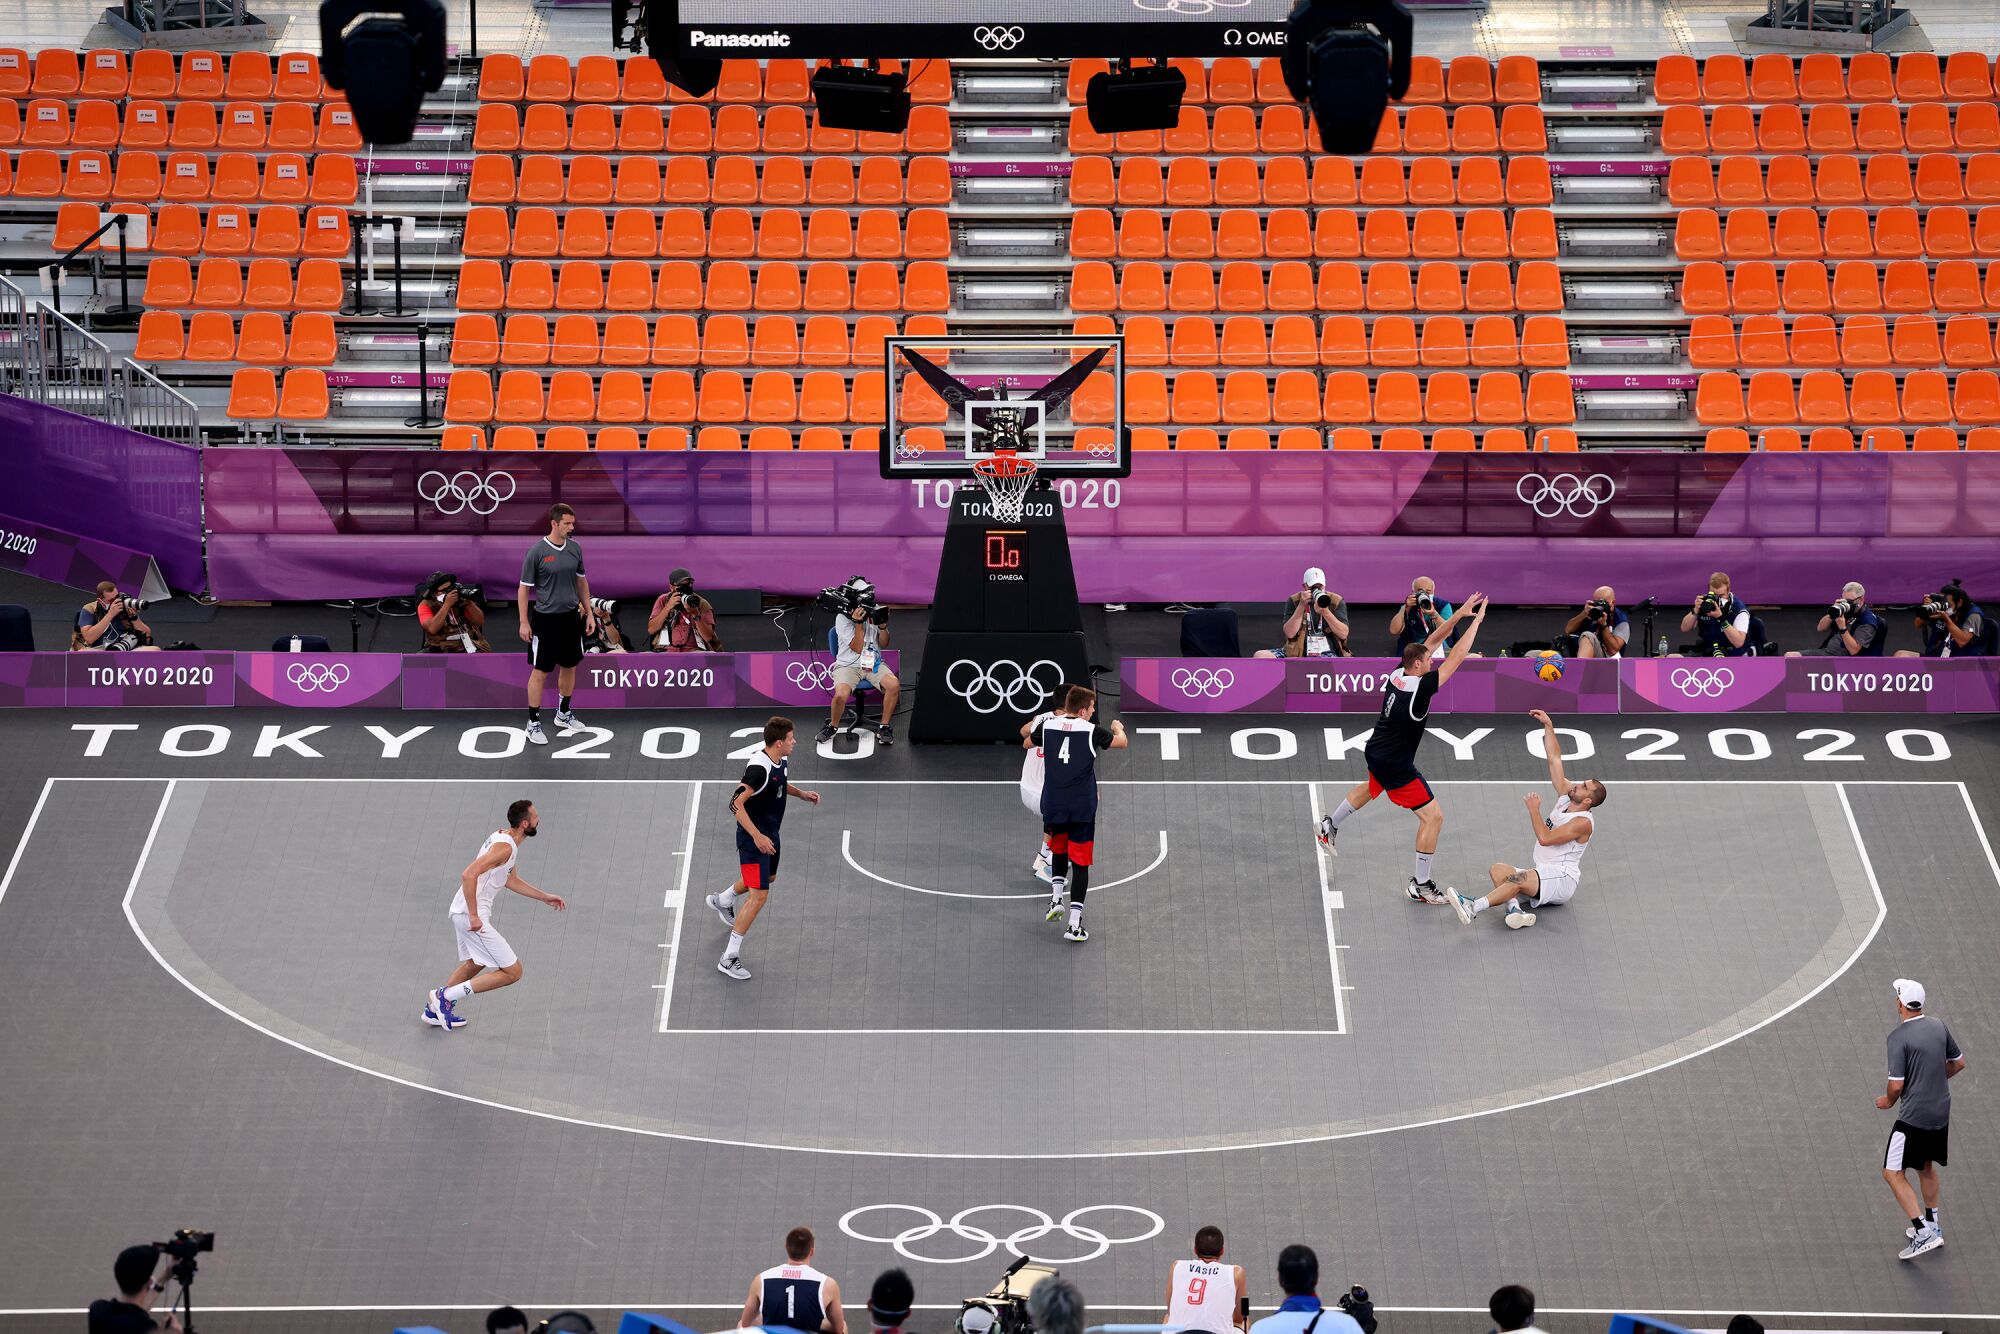 Belarus plays Latvia in the 3X3 Men's Basketball Semifinal.